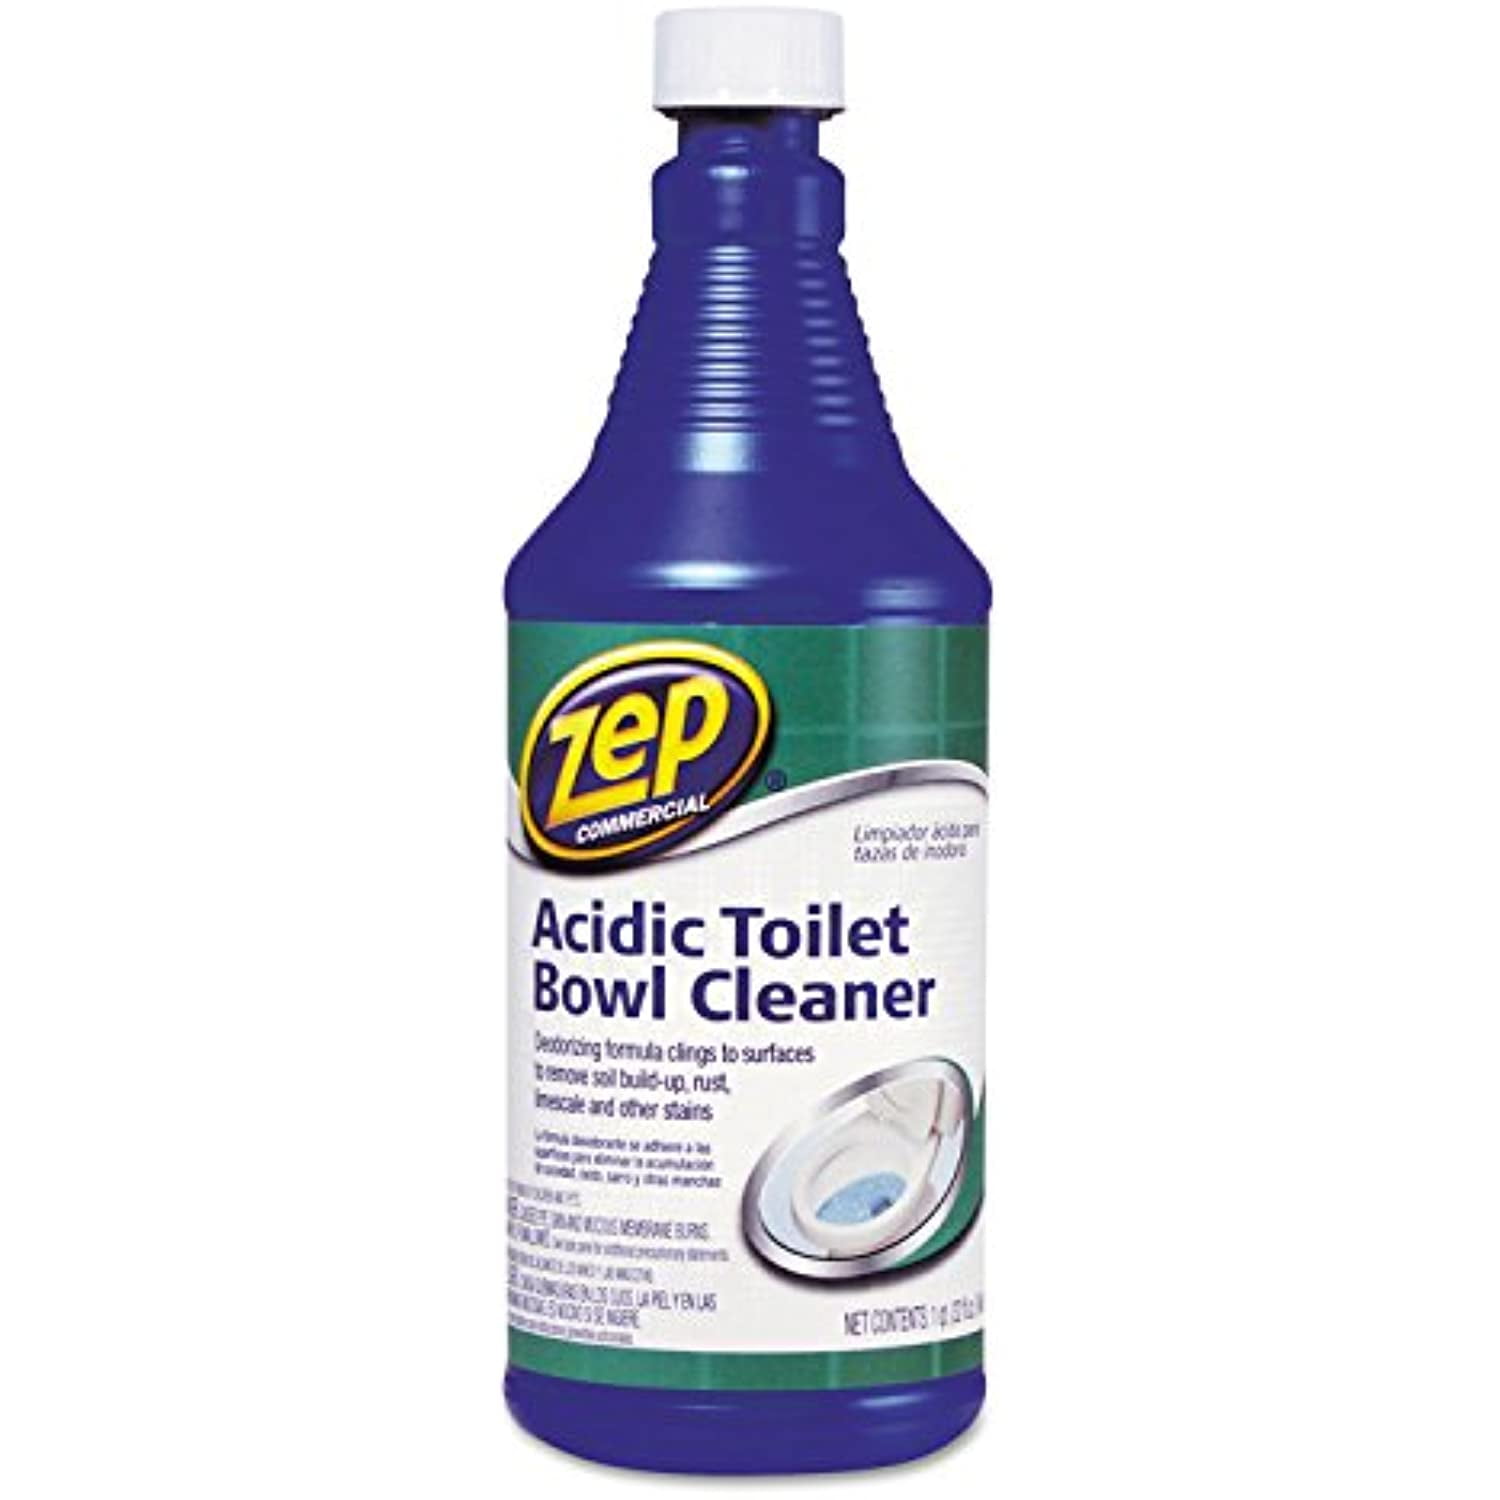 Zep Commercial 1046423 Acidic Toilet Bowl Cleaner, 32 Oz Bottle